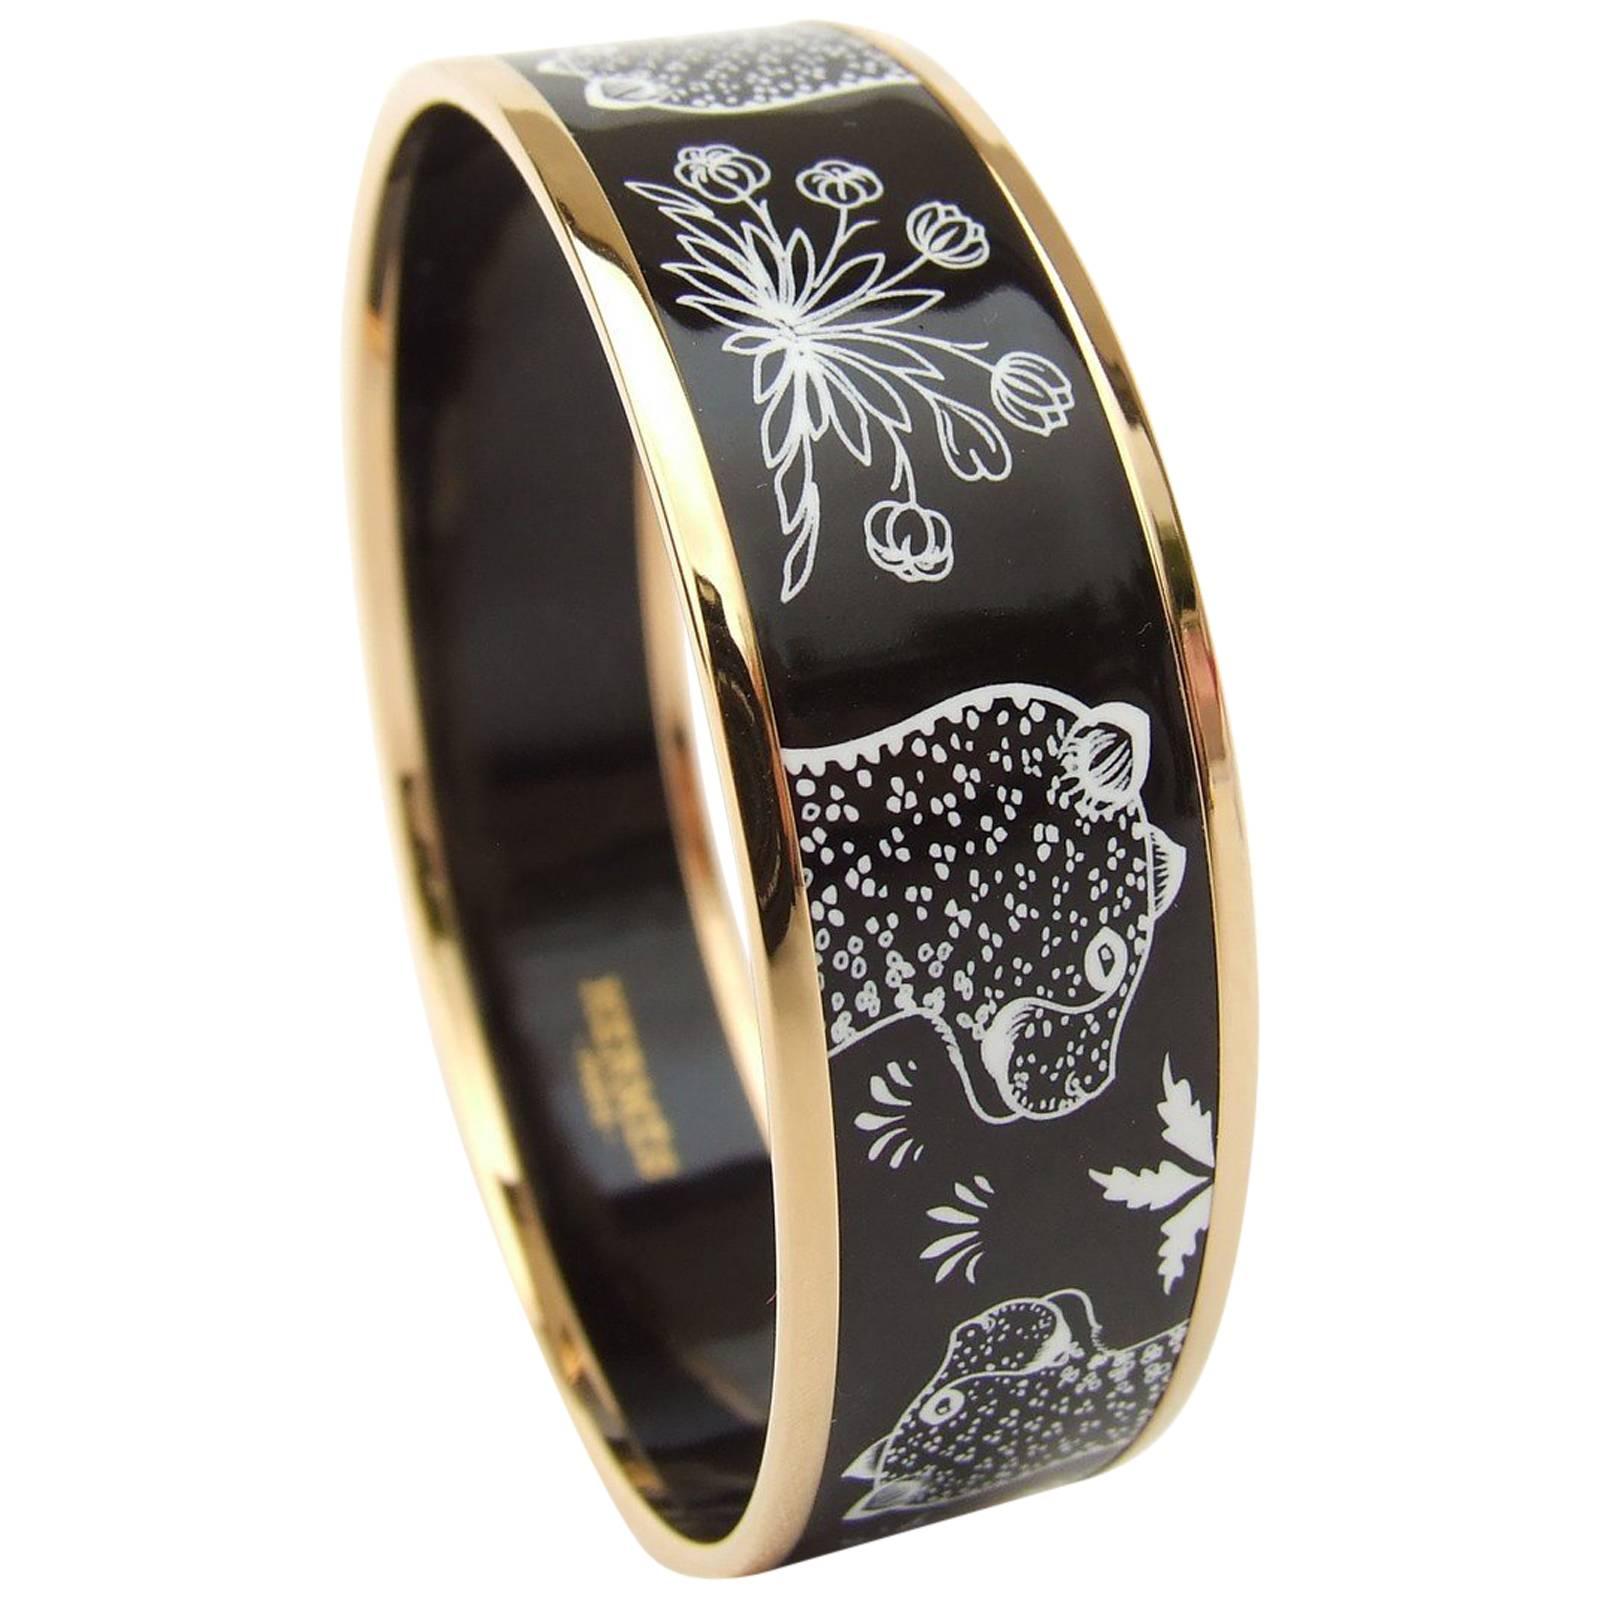 Hermes Enamel Printed Bracelet Leopards Black White Rose Gold Hdw Size 65